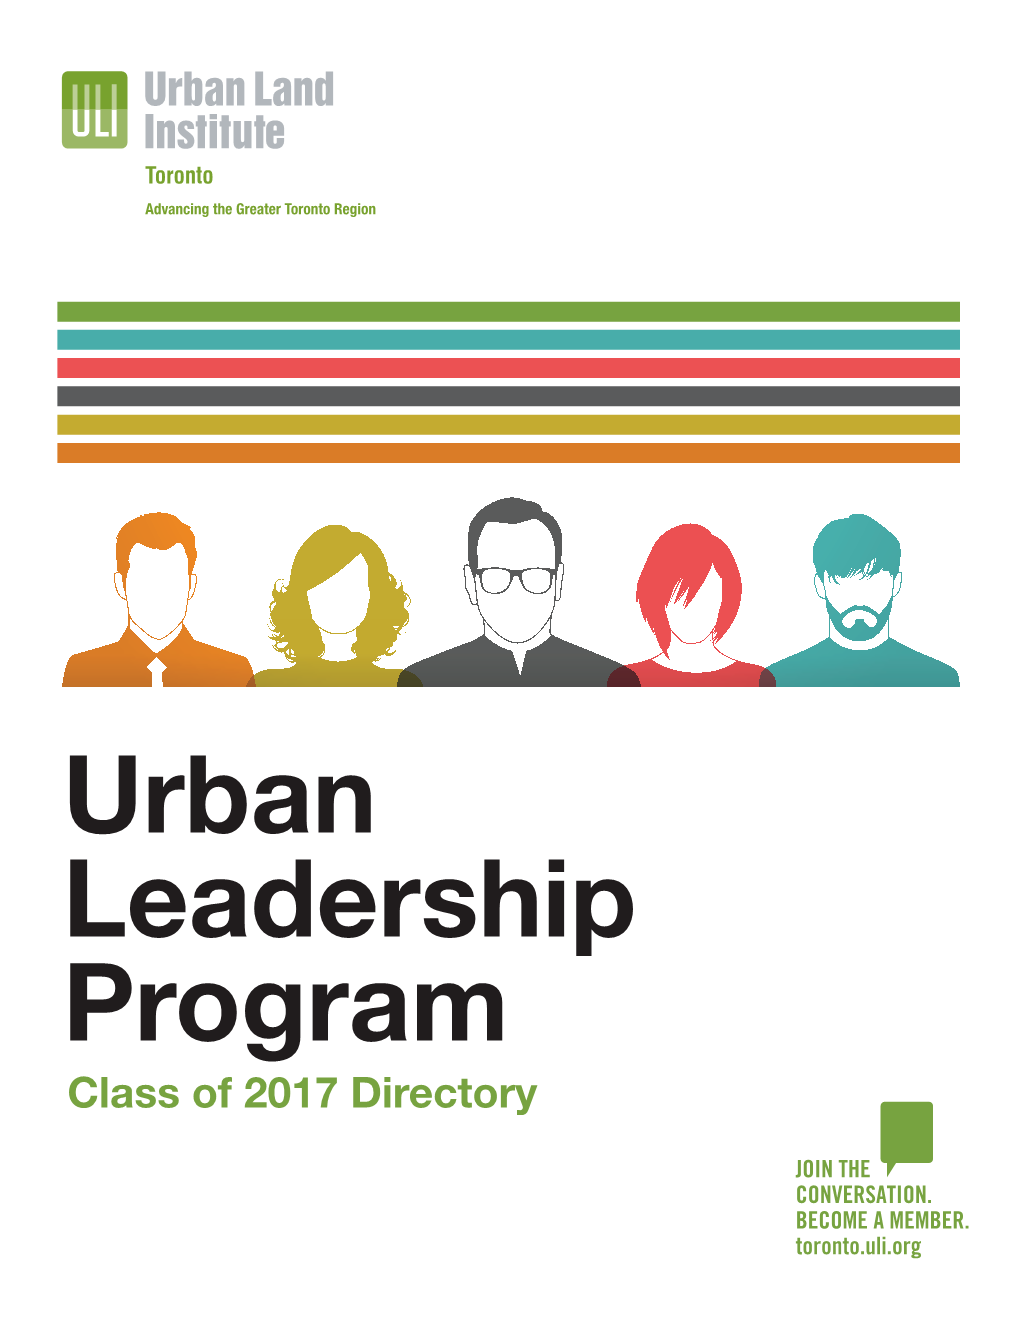 Urban Leadership Program Class of 2017 Directory